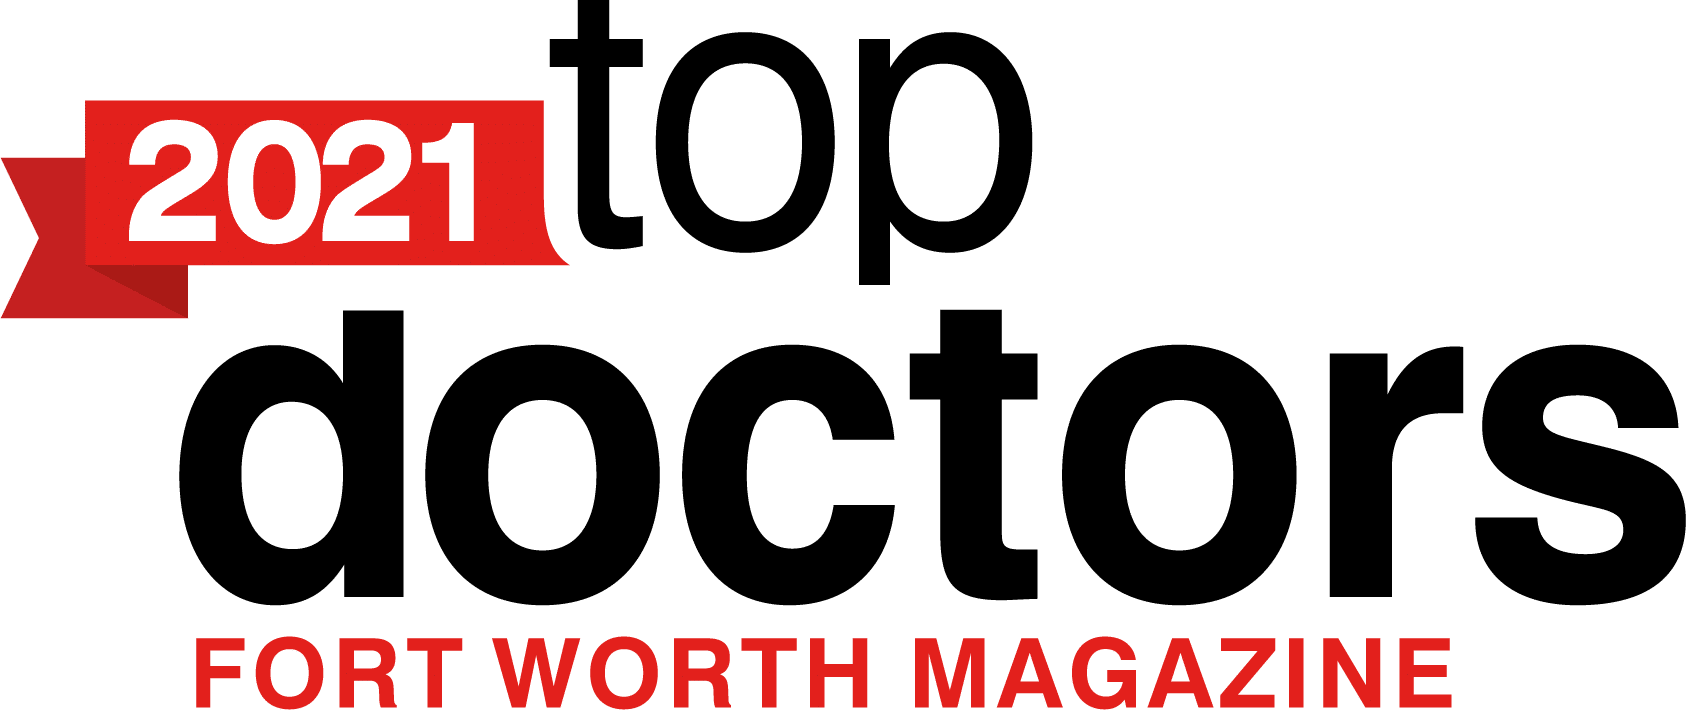 Fort Worth Magazine 2021 Top Doctors logo